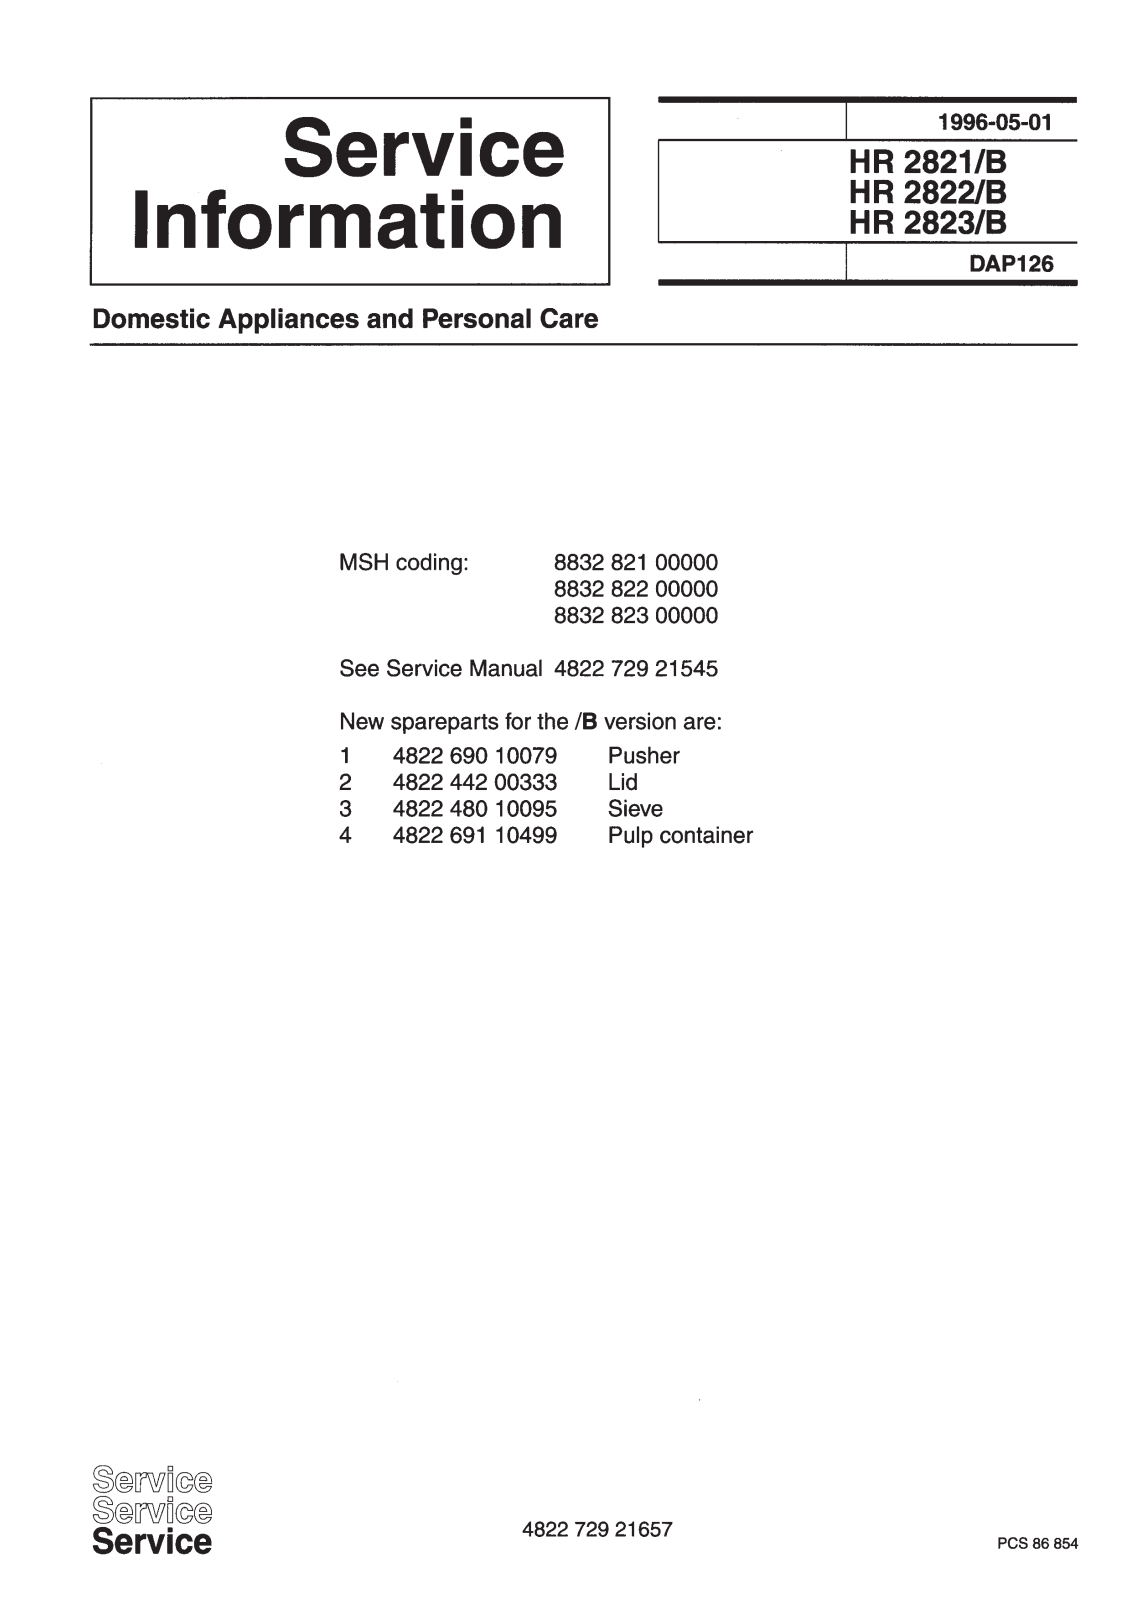 Philips HR 2823-B, HR 2822-B, HR 2821-B Service Manual